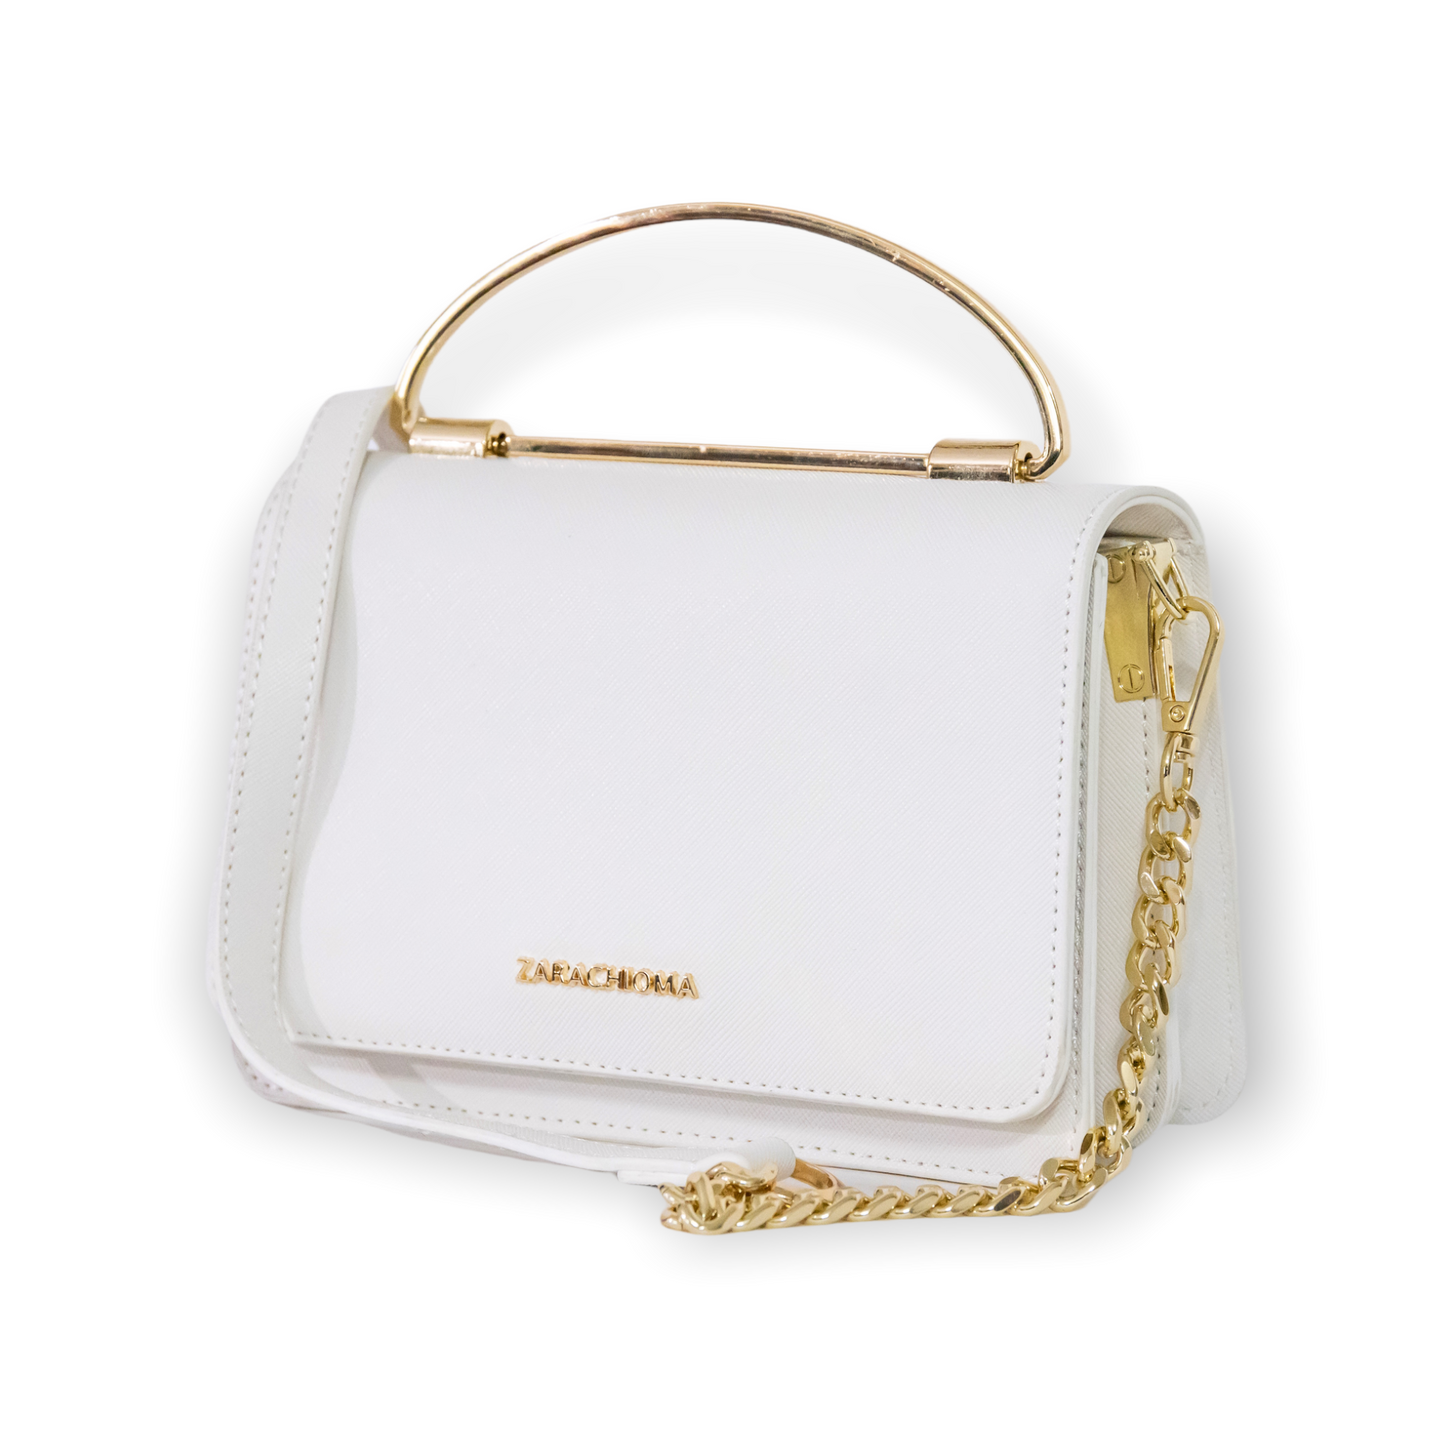 Winnie Mini Front Flap Top Handle bag in white